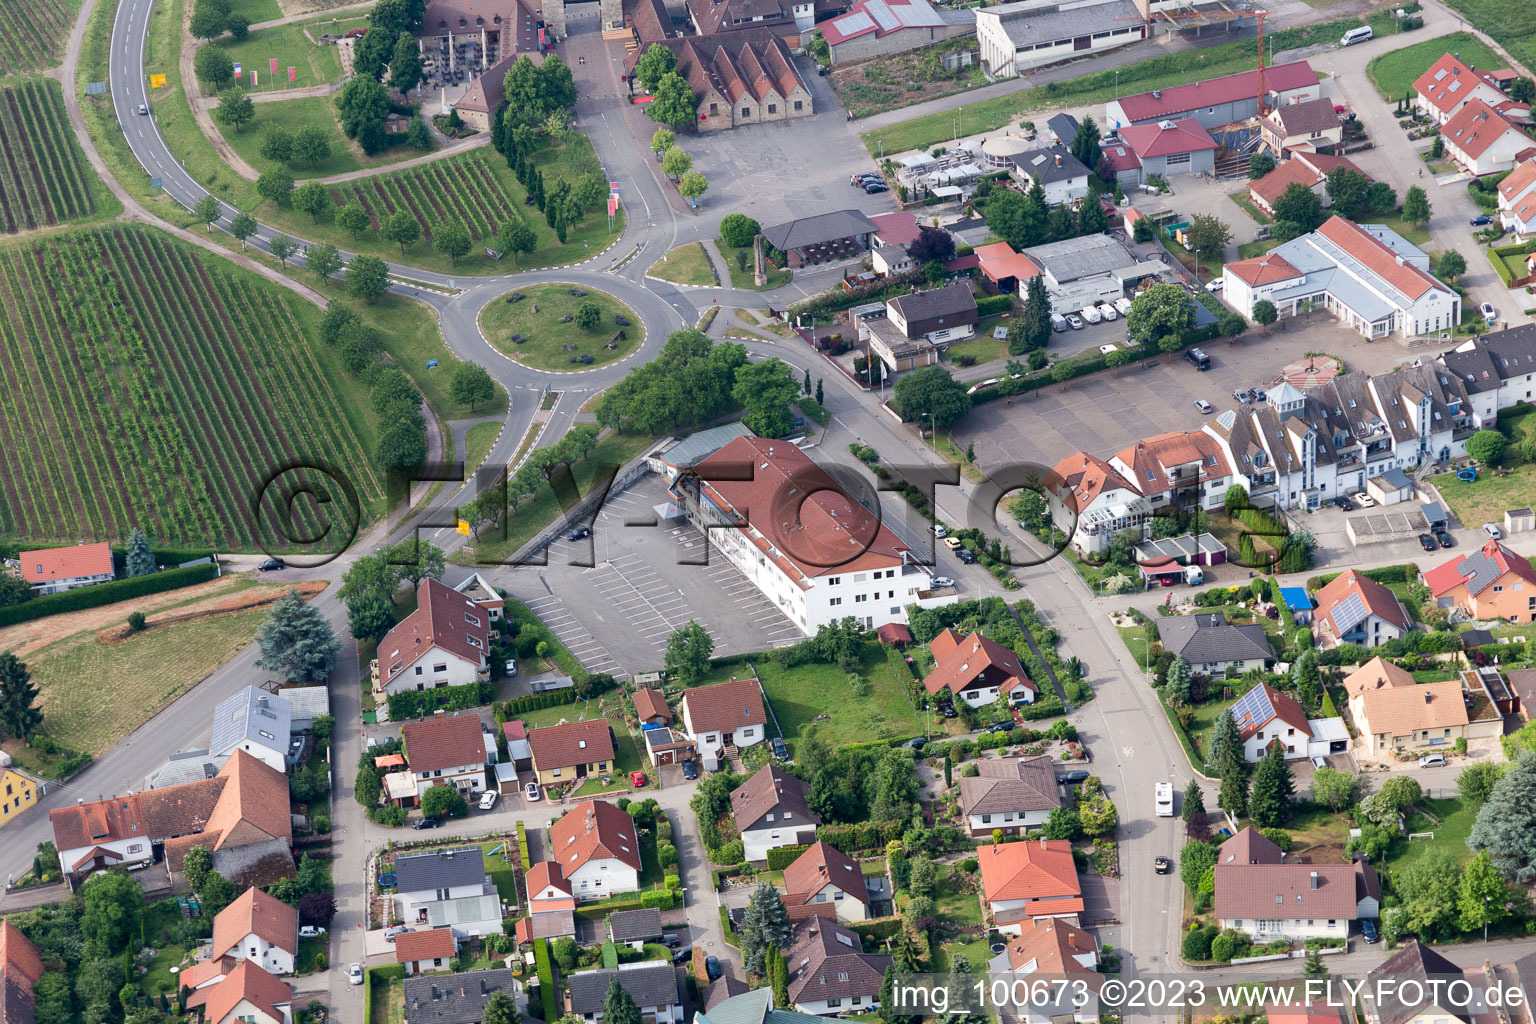 District Rechtenbach in Schweigen-Rechtenbach in the state Rhineland-Palatinate, Germany seen from a drone